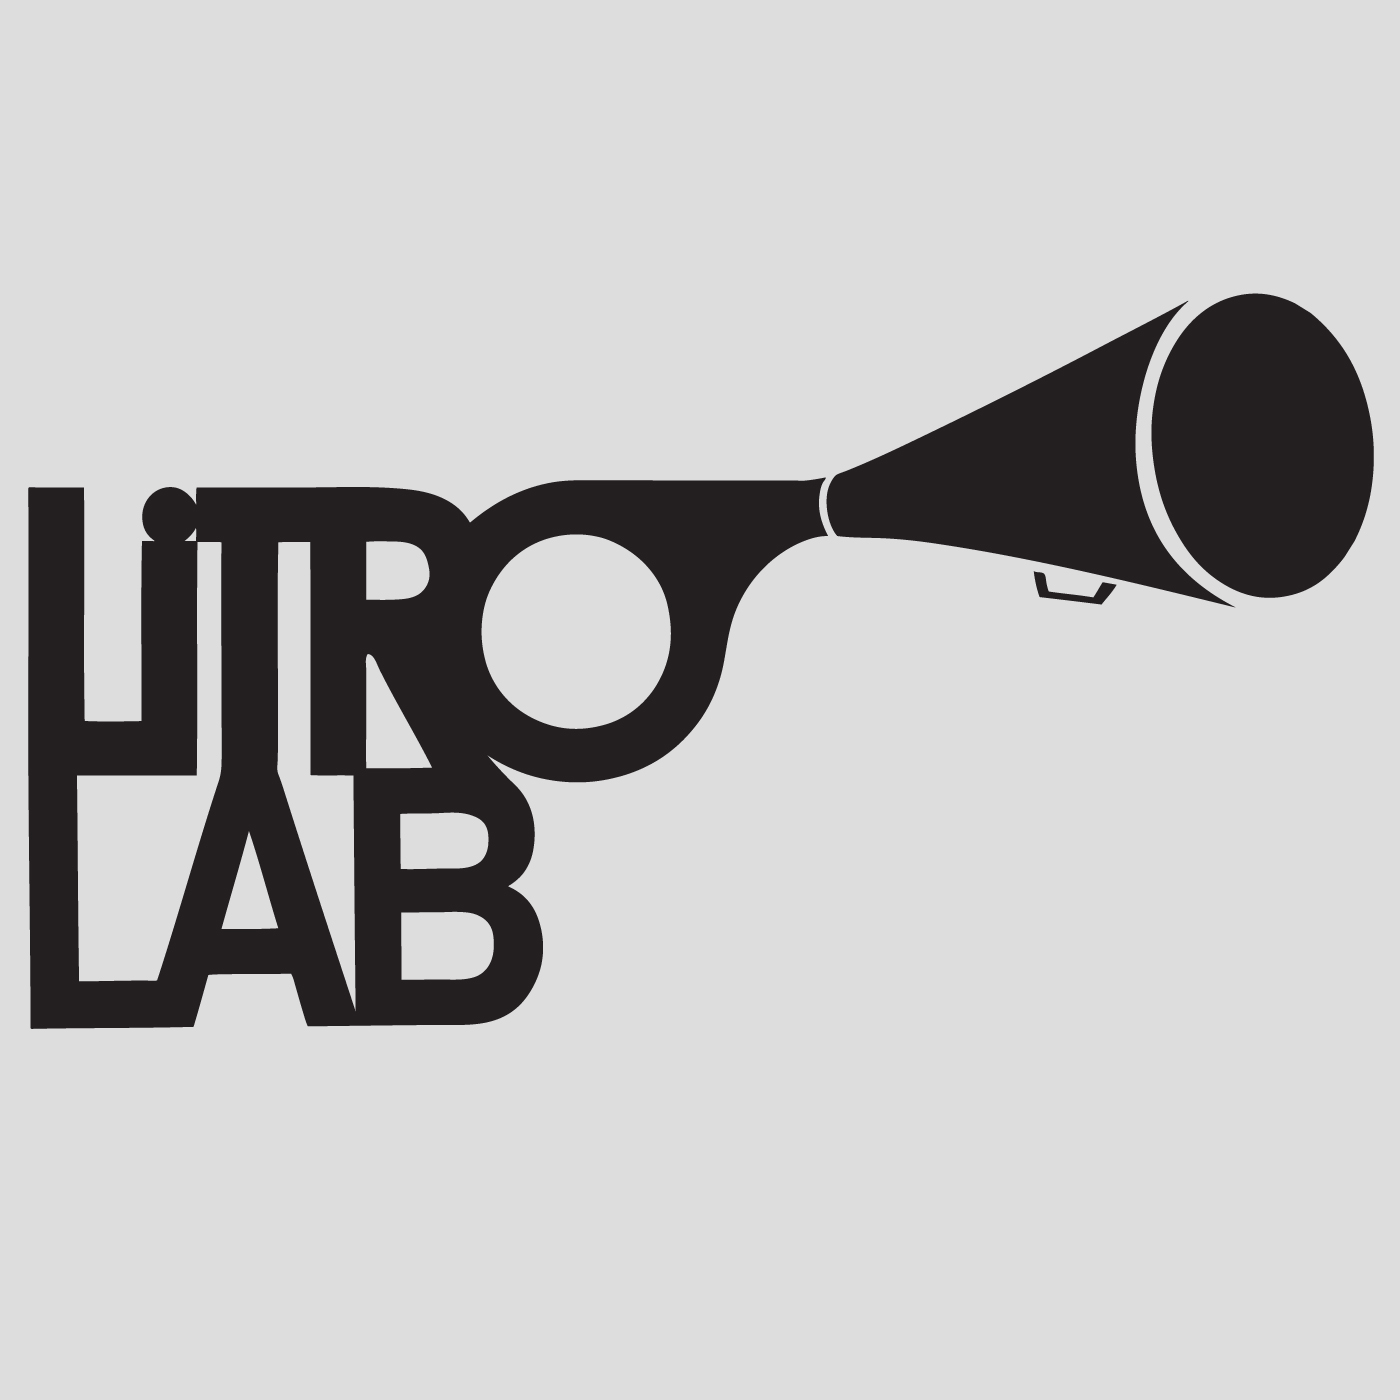 Litro Lab Podcast